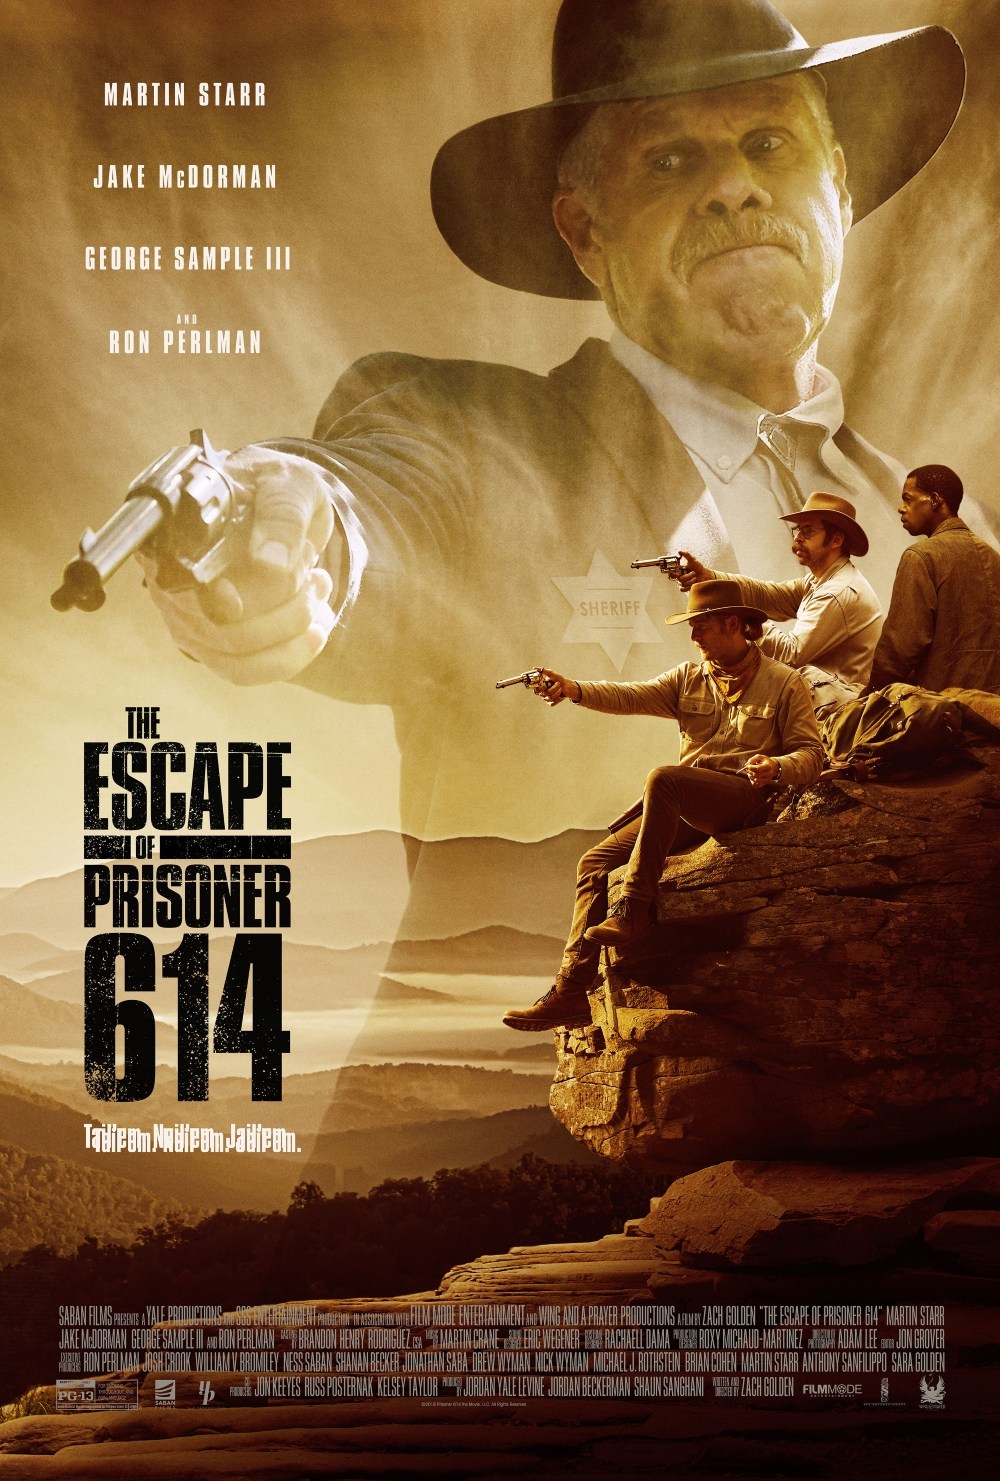 The-Escape-of-Prisoner-614-movie-poster.jpg